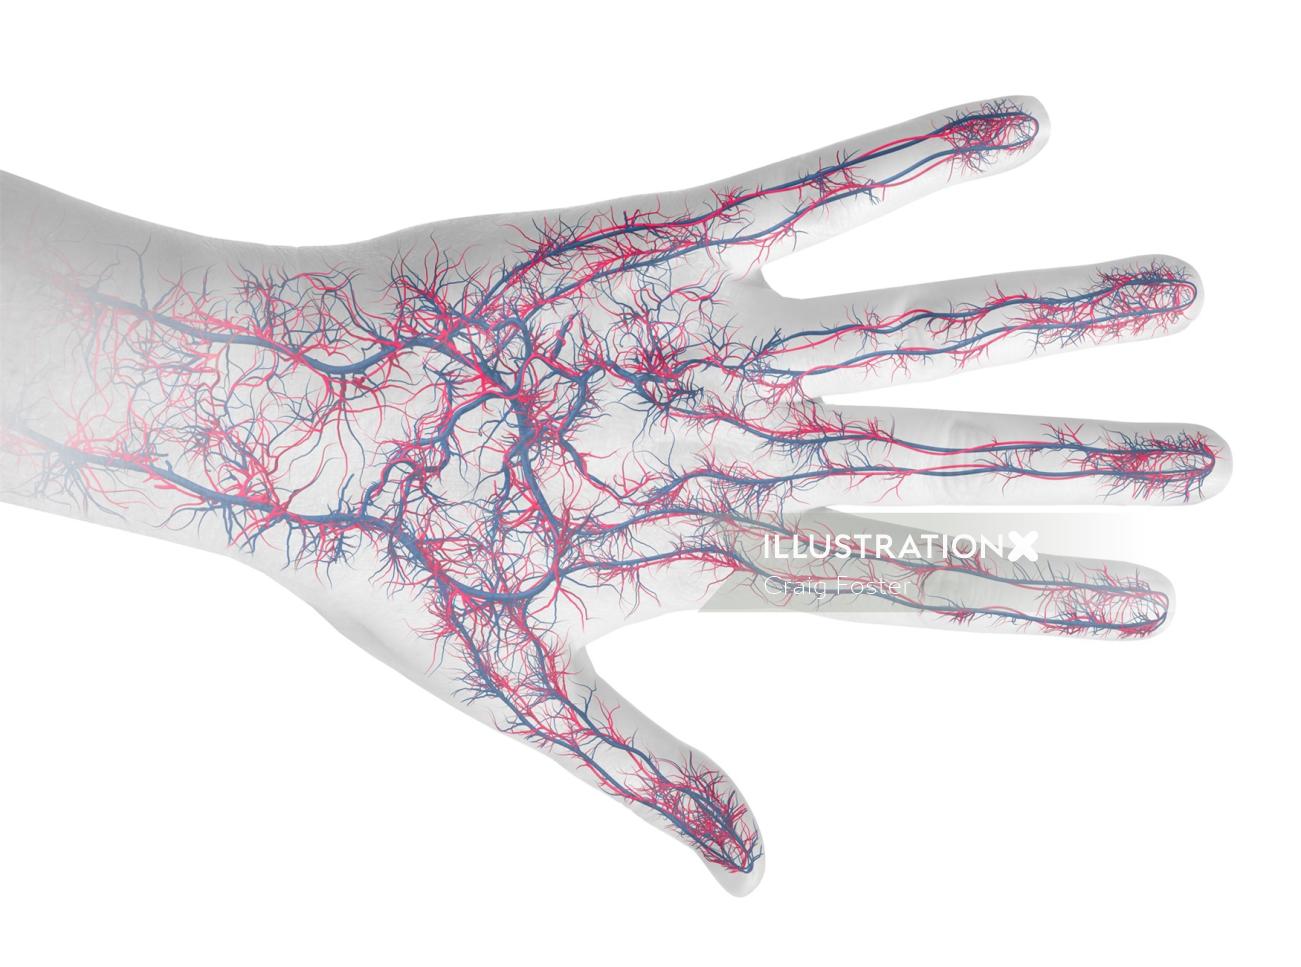 An illustration of hand veins hr